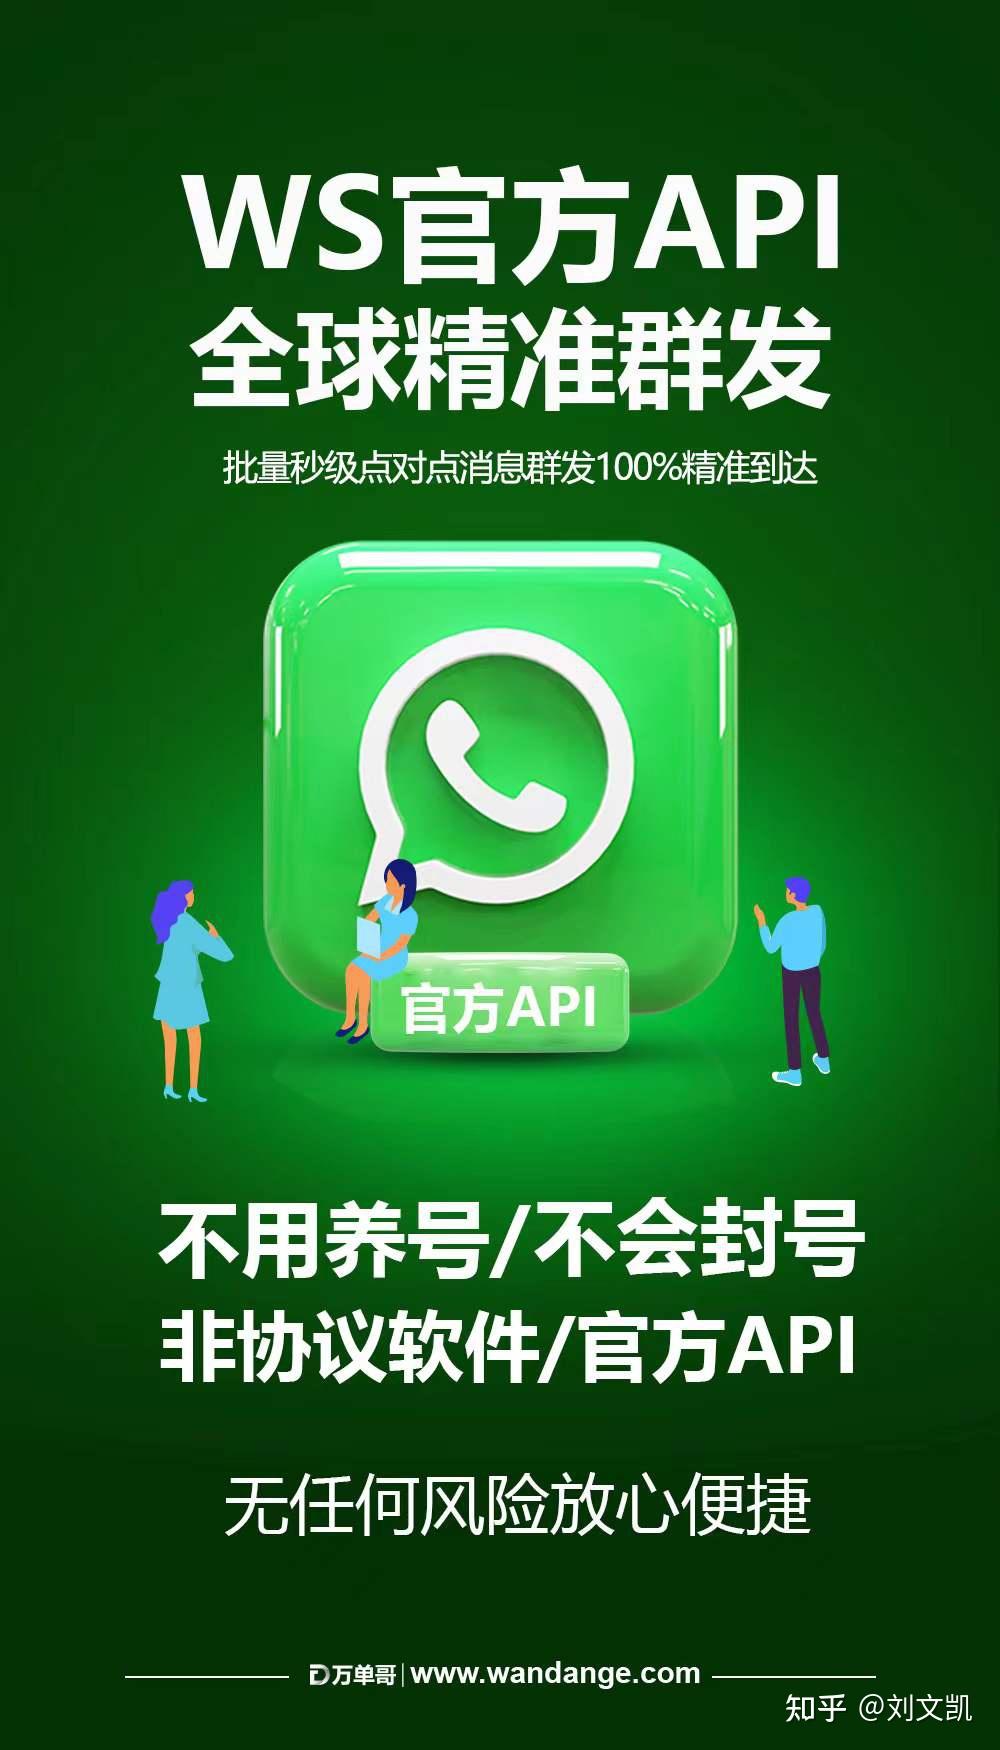 whatsapp商业版下载官方app-体验whatsapp商